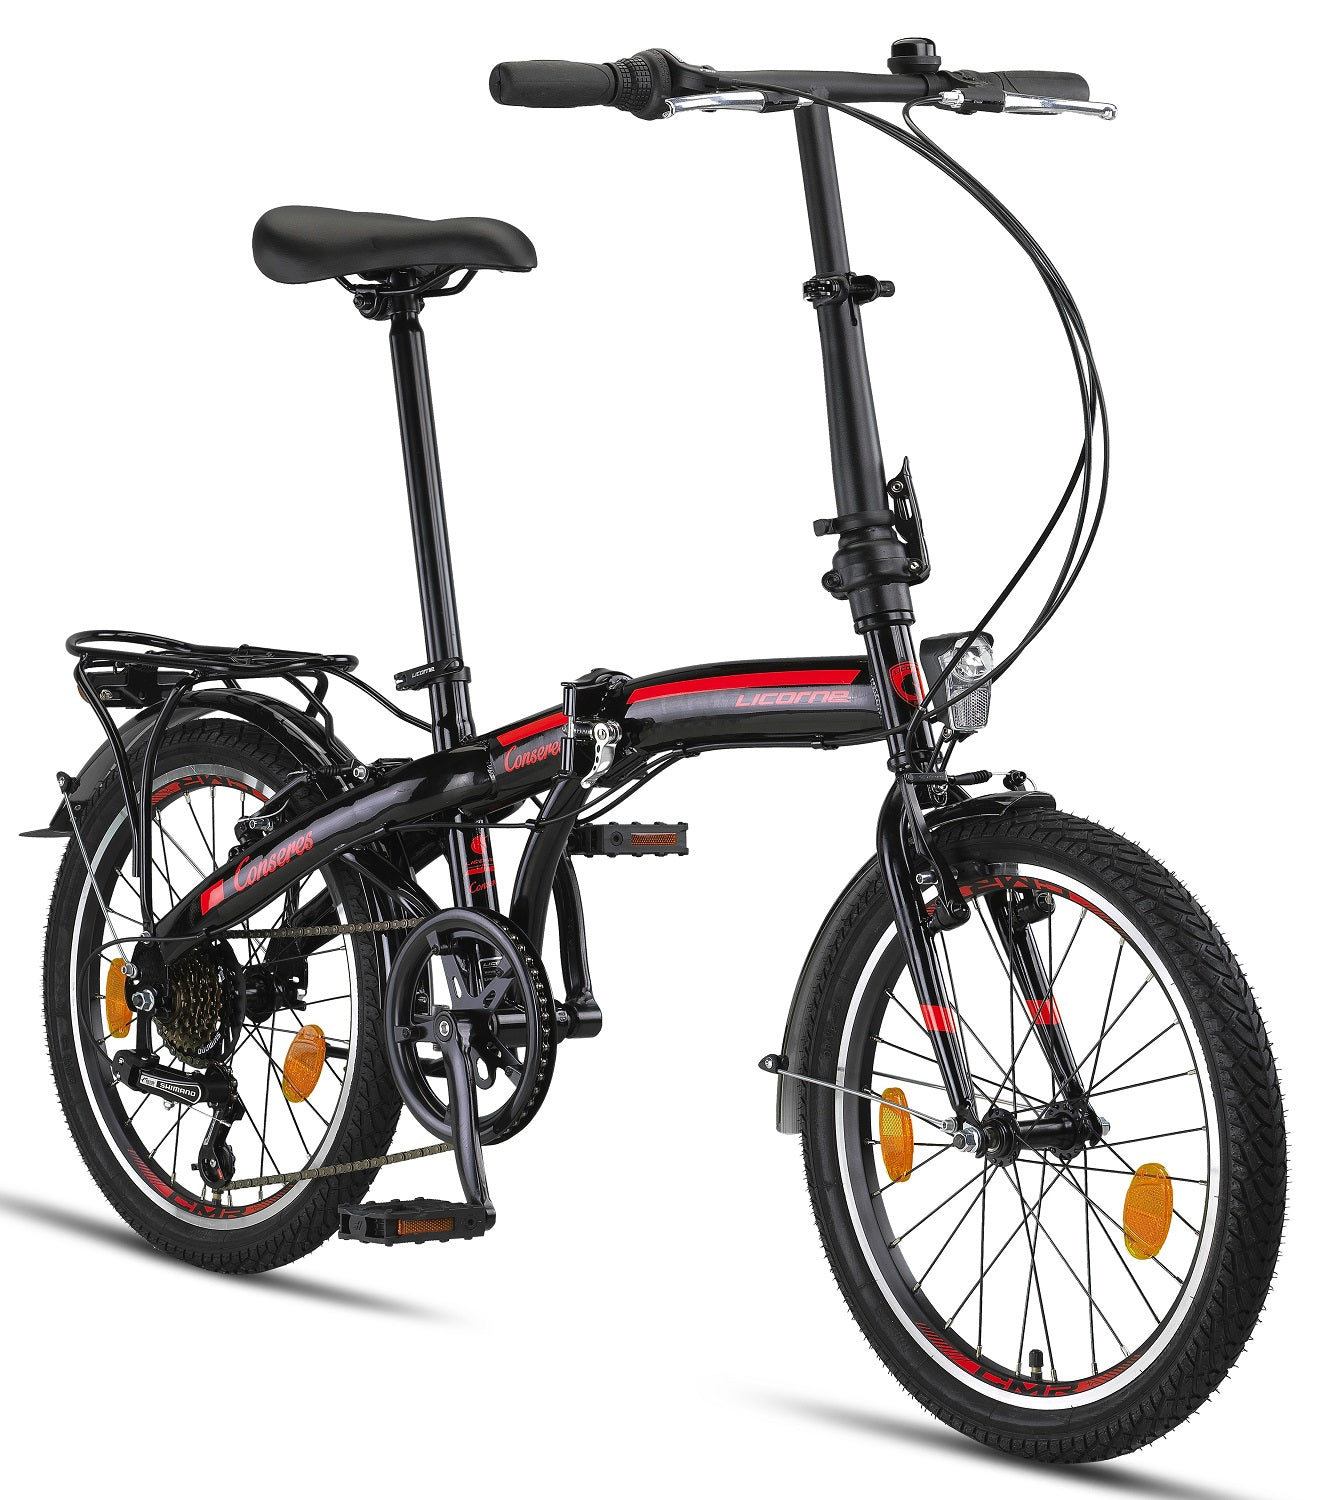 Licorne Bike Conseres Premium Folding Bike in 20 inch - bike for men, boys, girls and women - Shimano 6 gears - Dutch bike